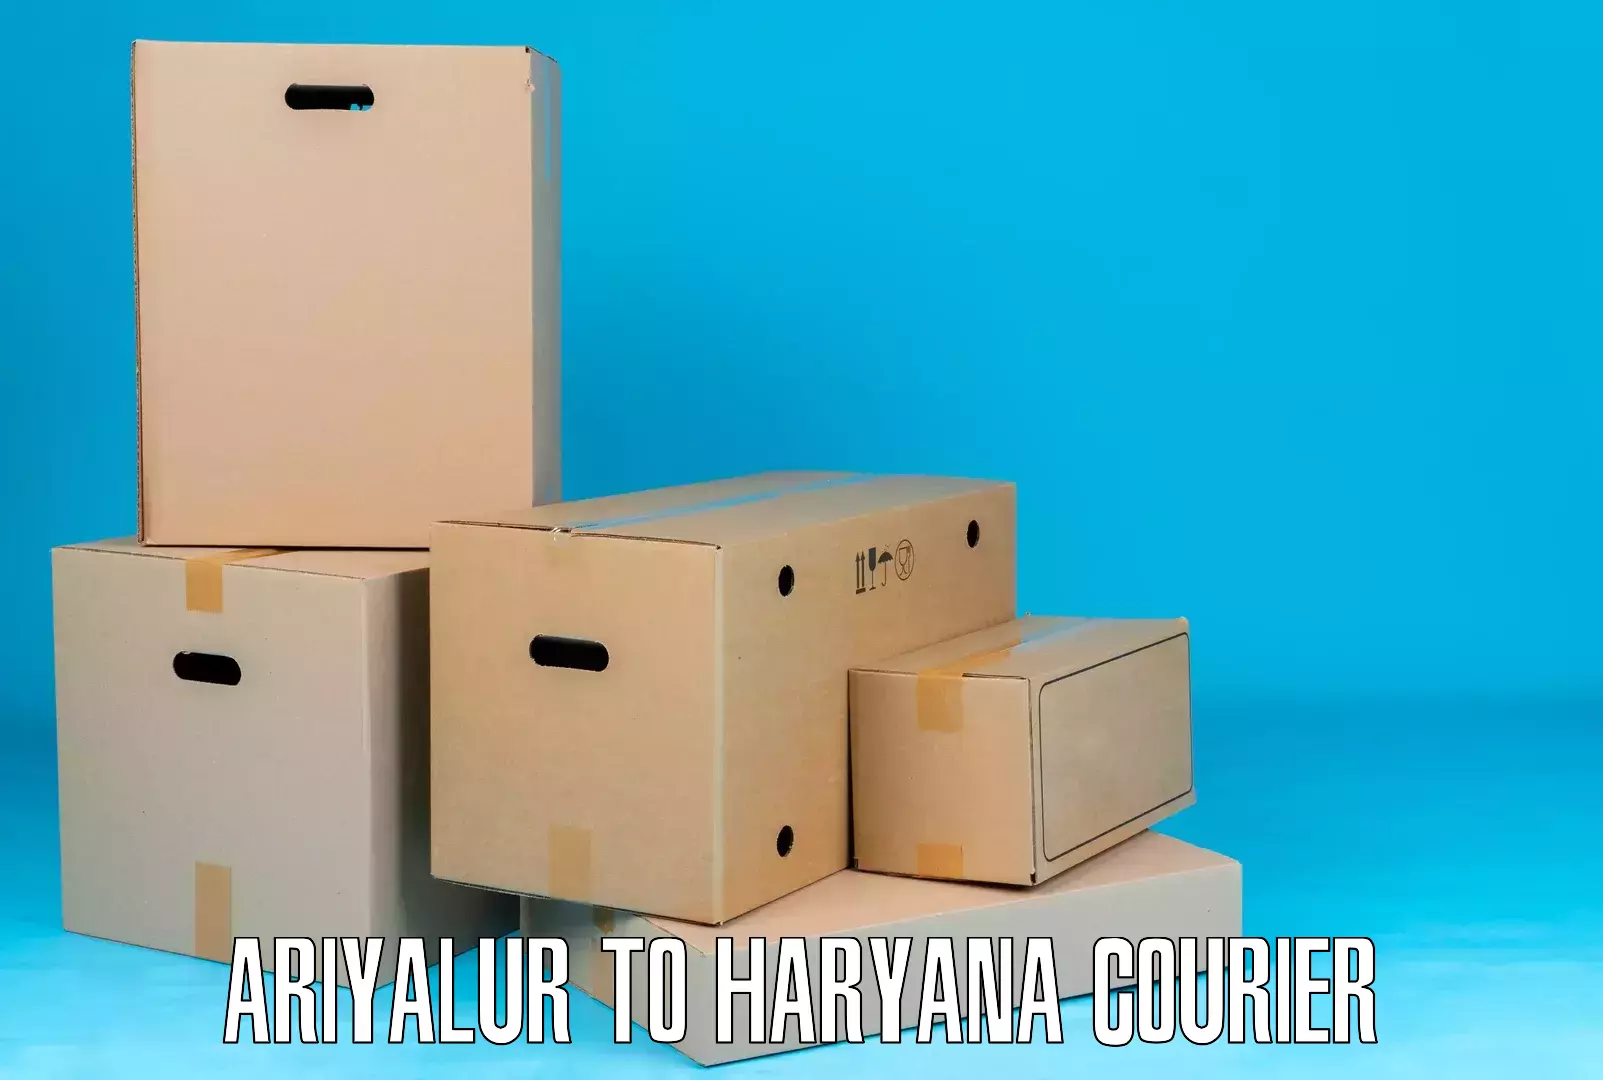 Global courier networks Ariyalur to Bhuna